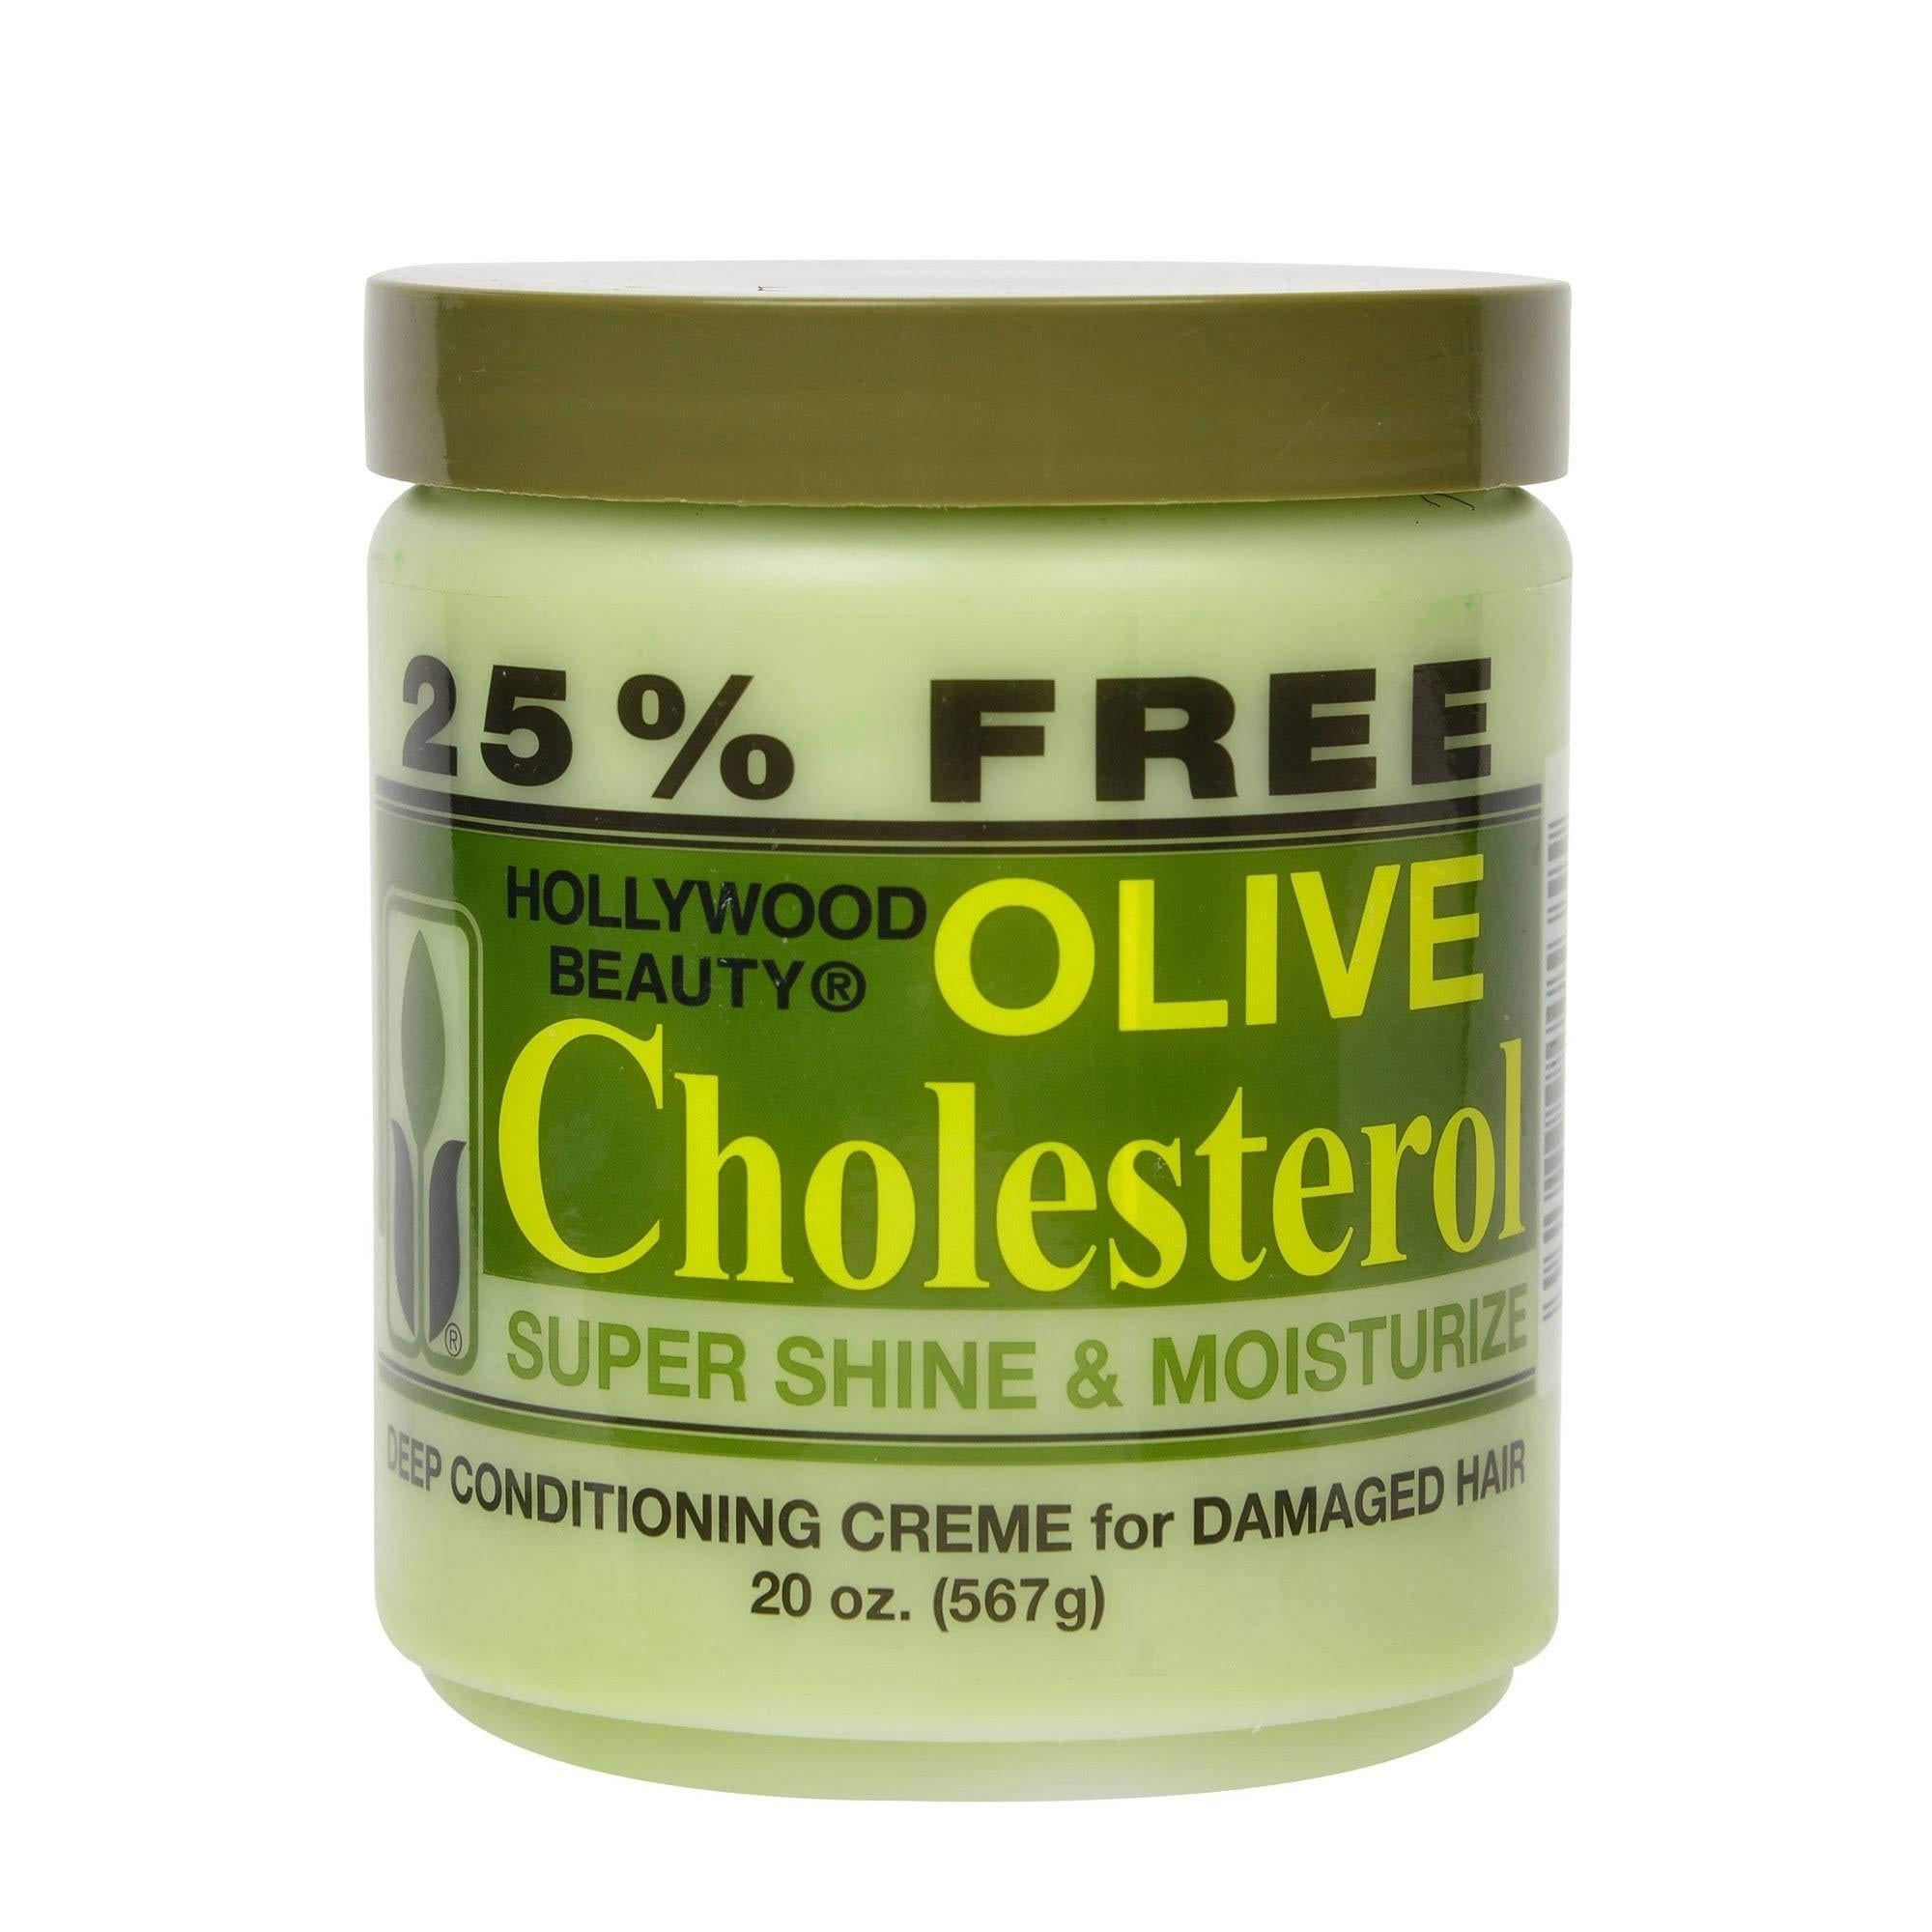 Hollywood Beauty Olive Cholesterol 20 Oz